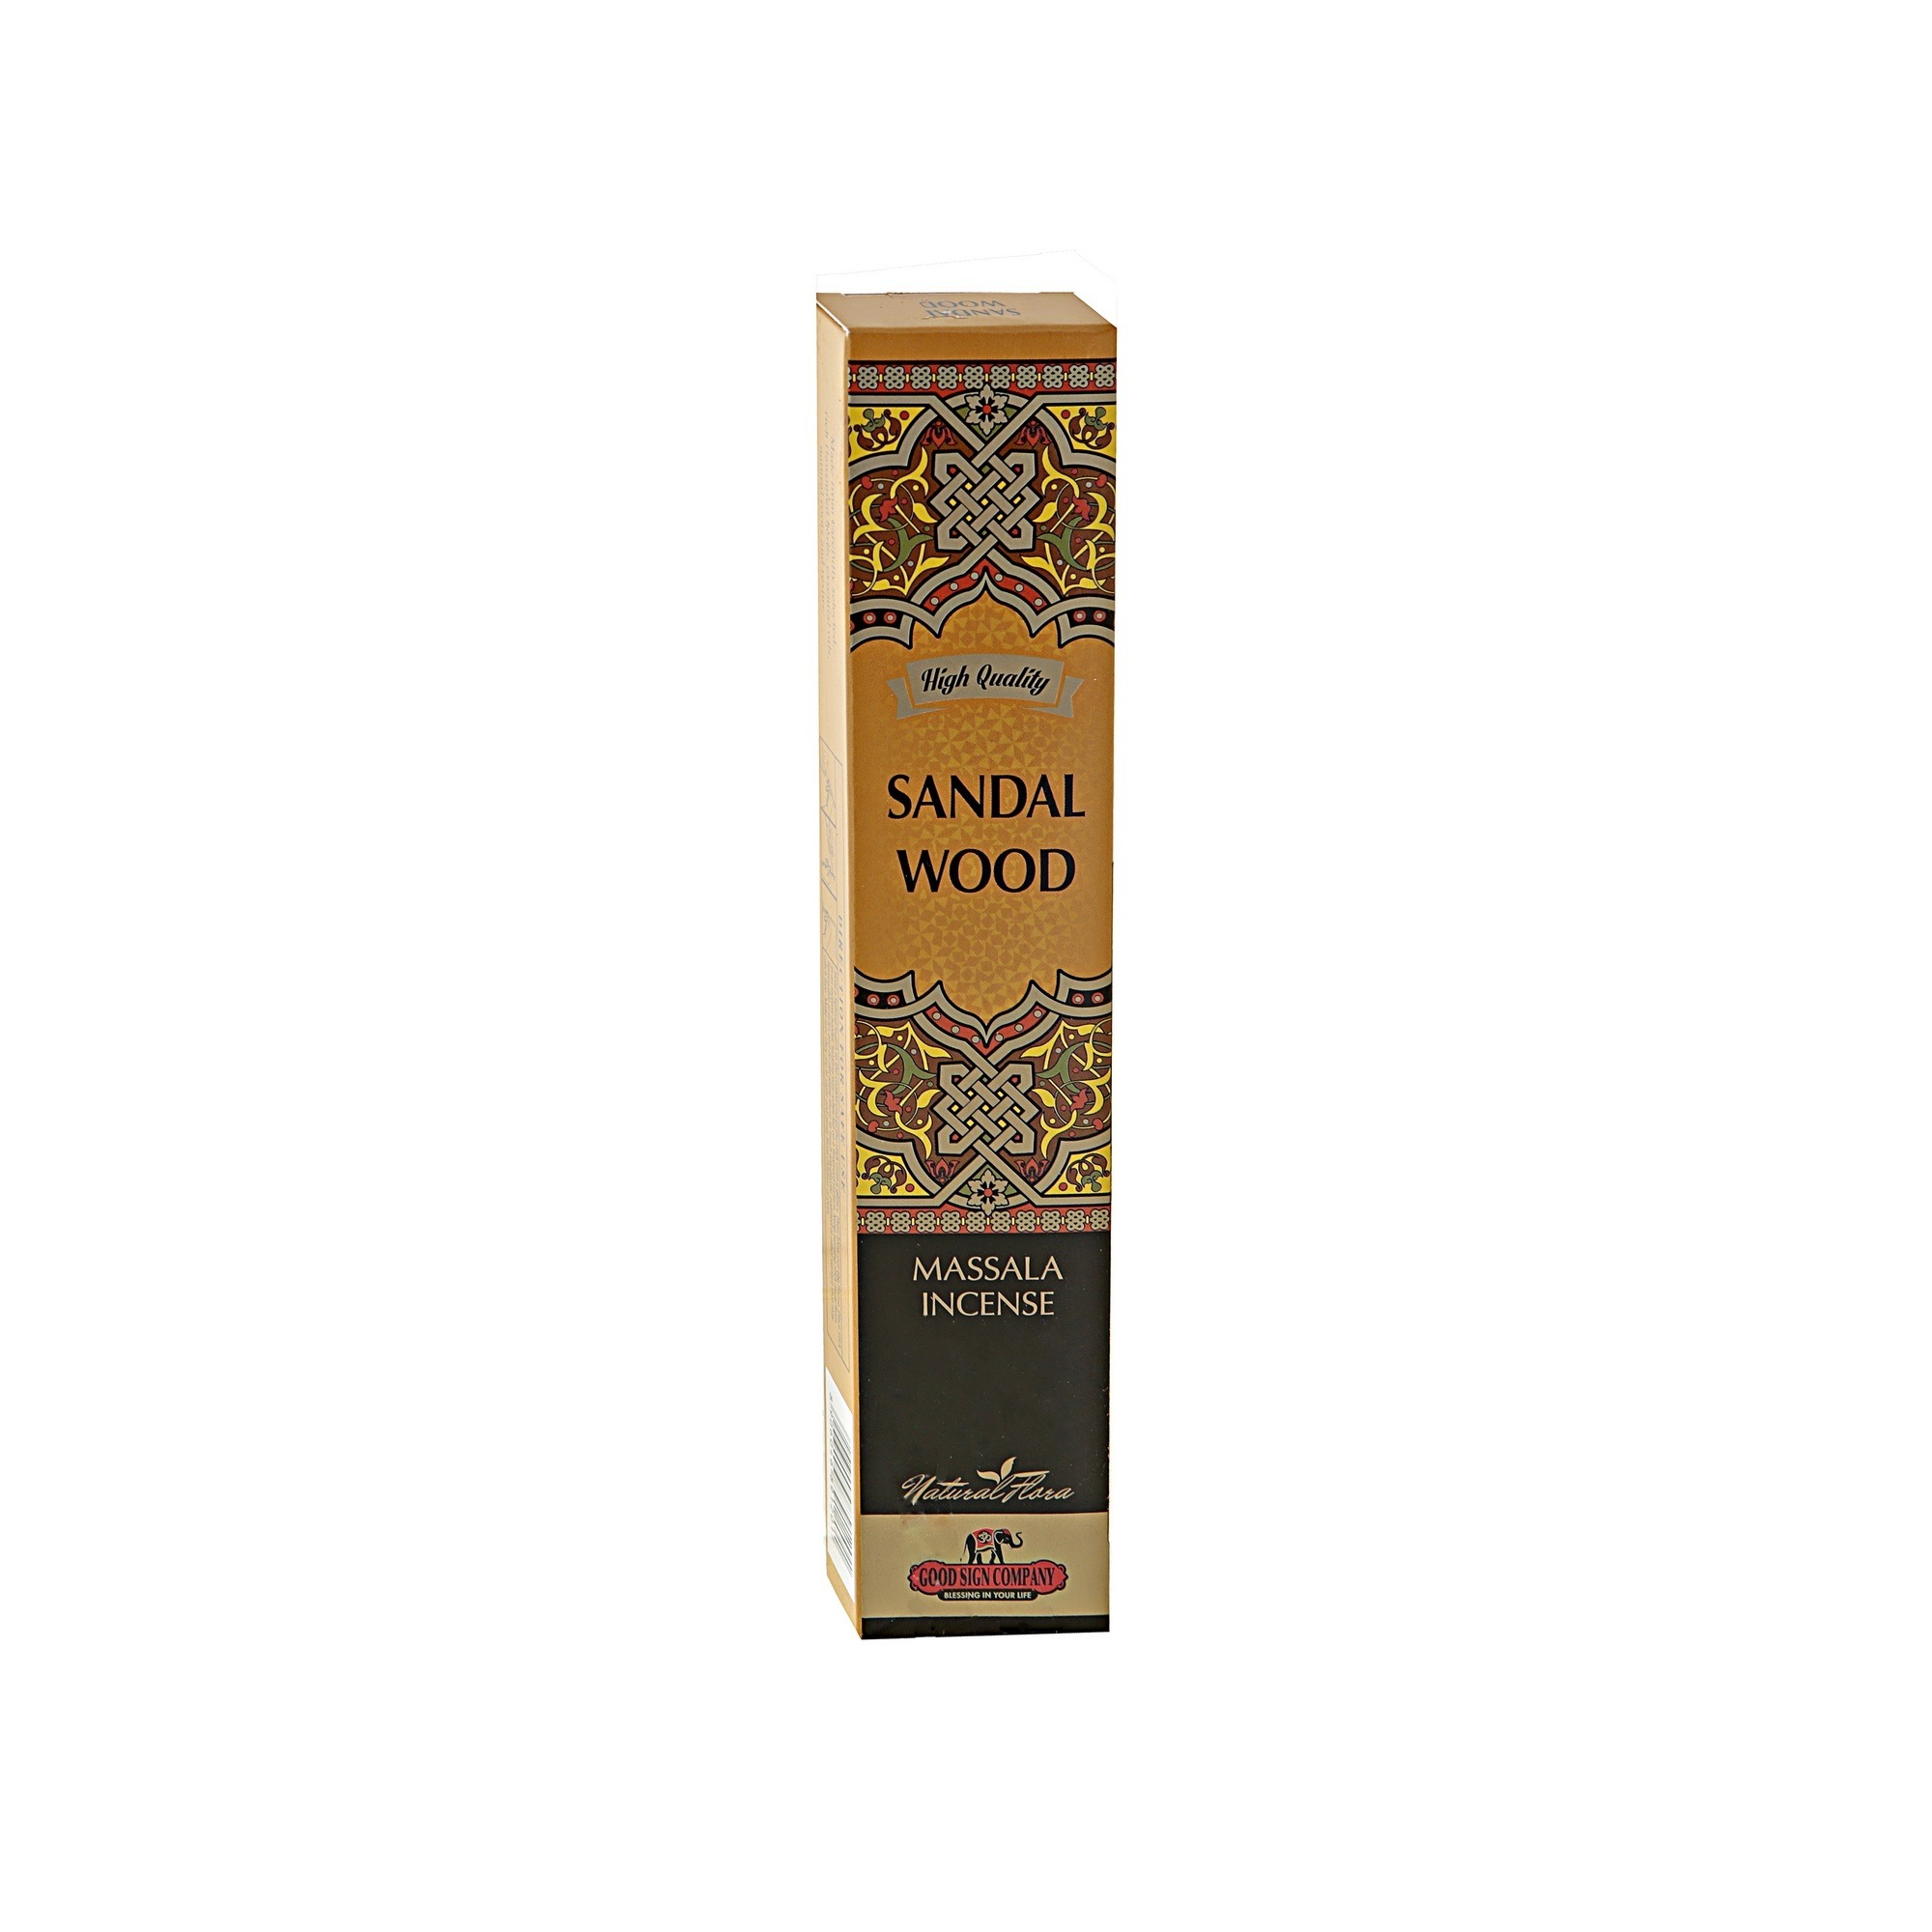 Аромапалочки Good Sign Company Sandal wood 14 шт см lavvie sandal wood private collection 70